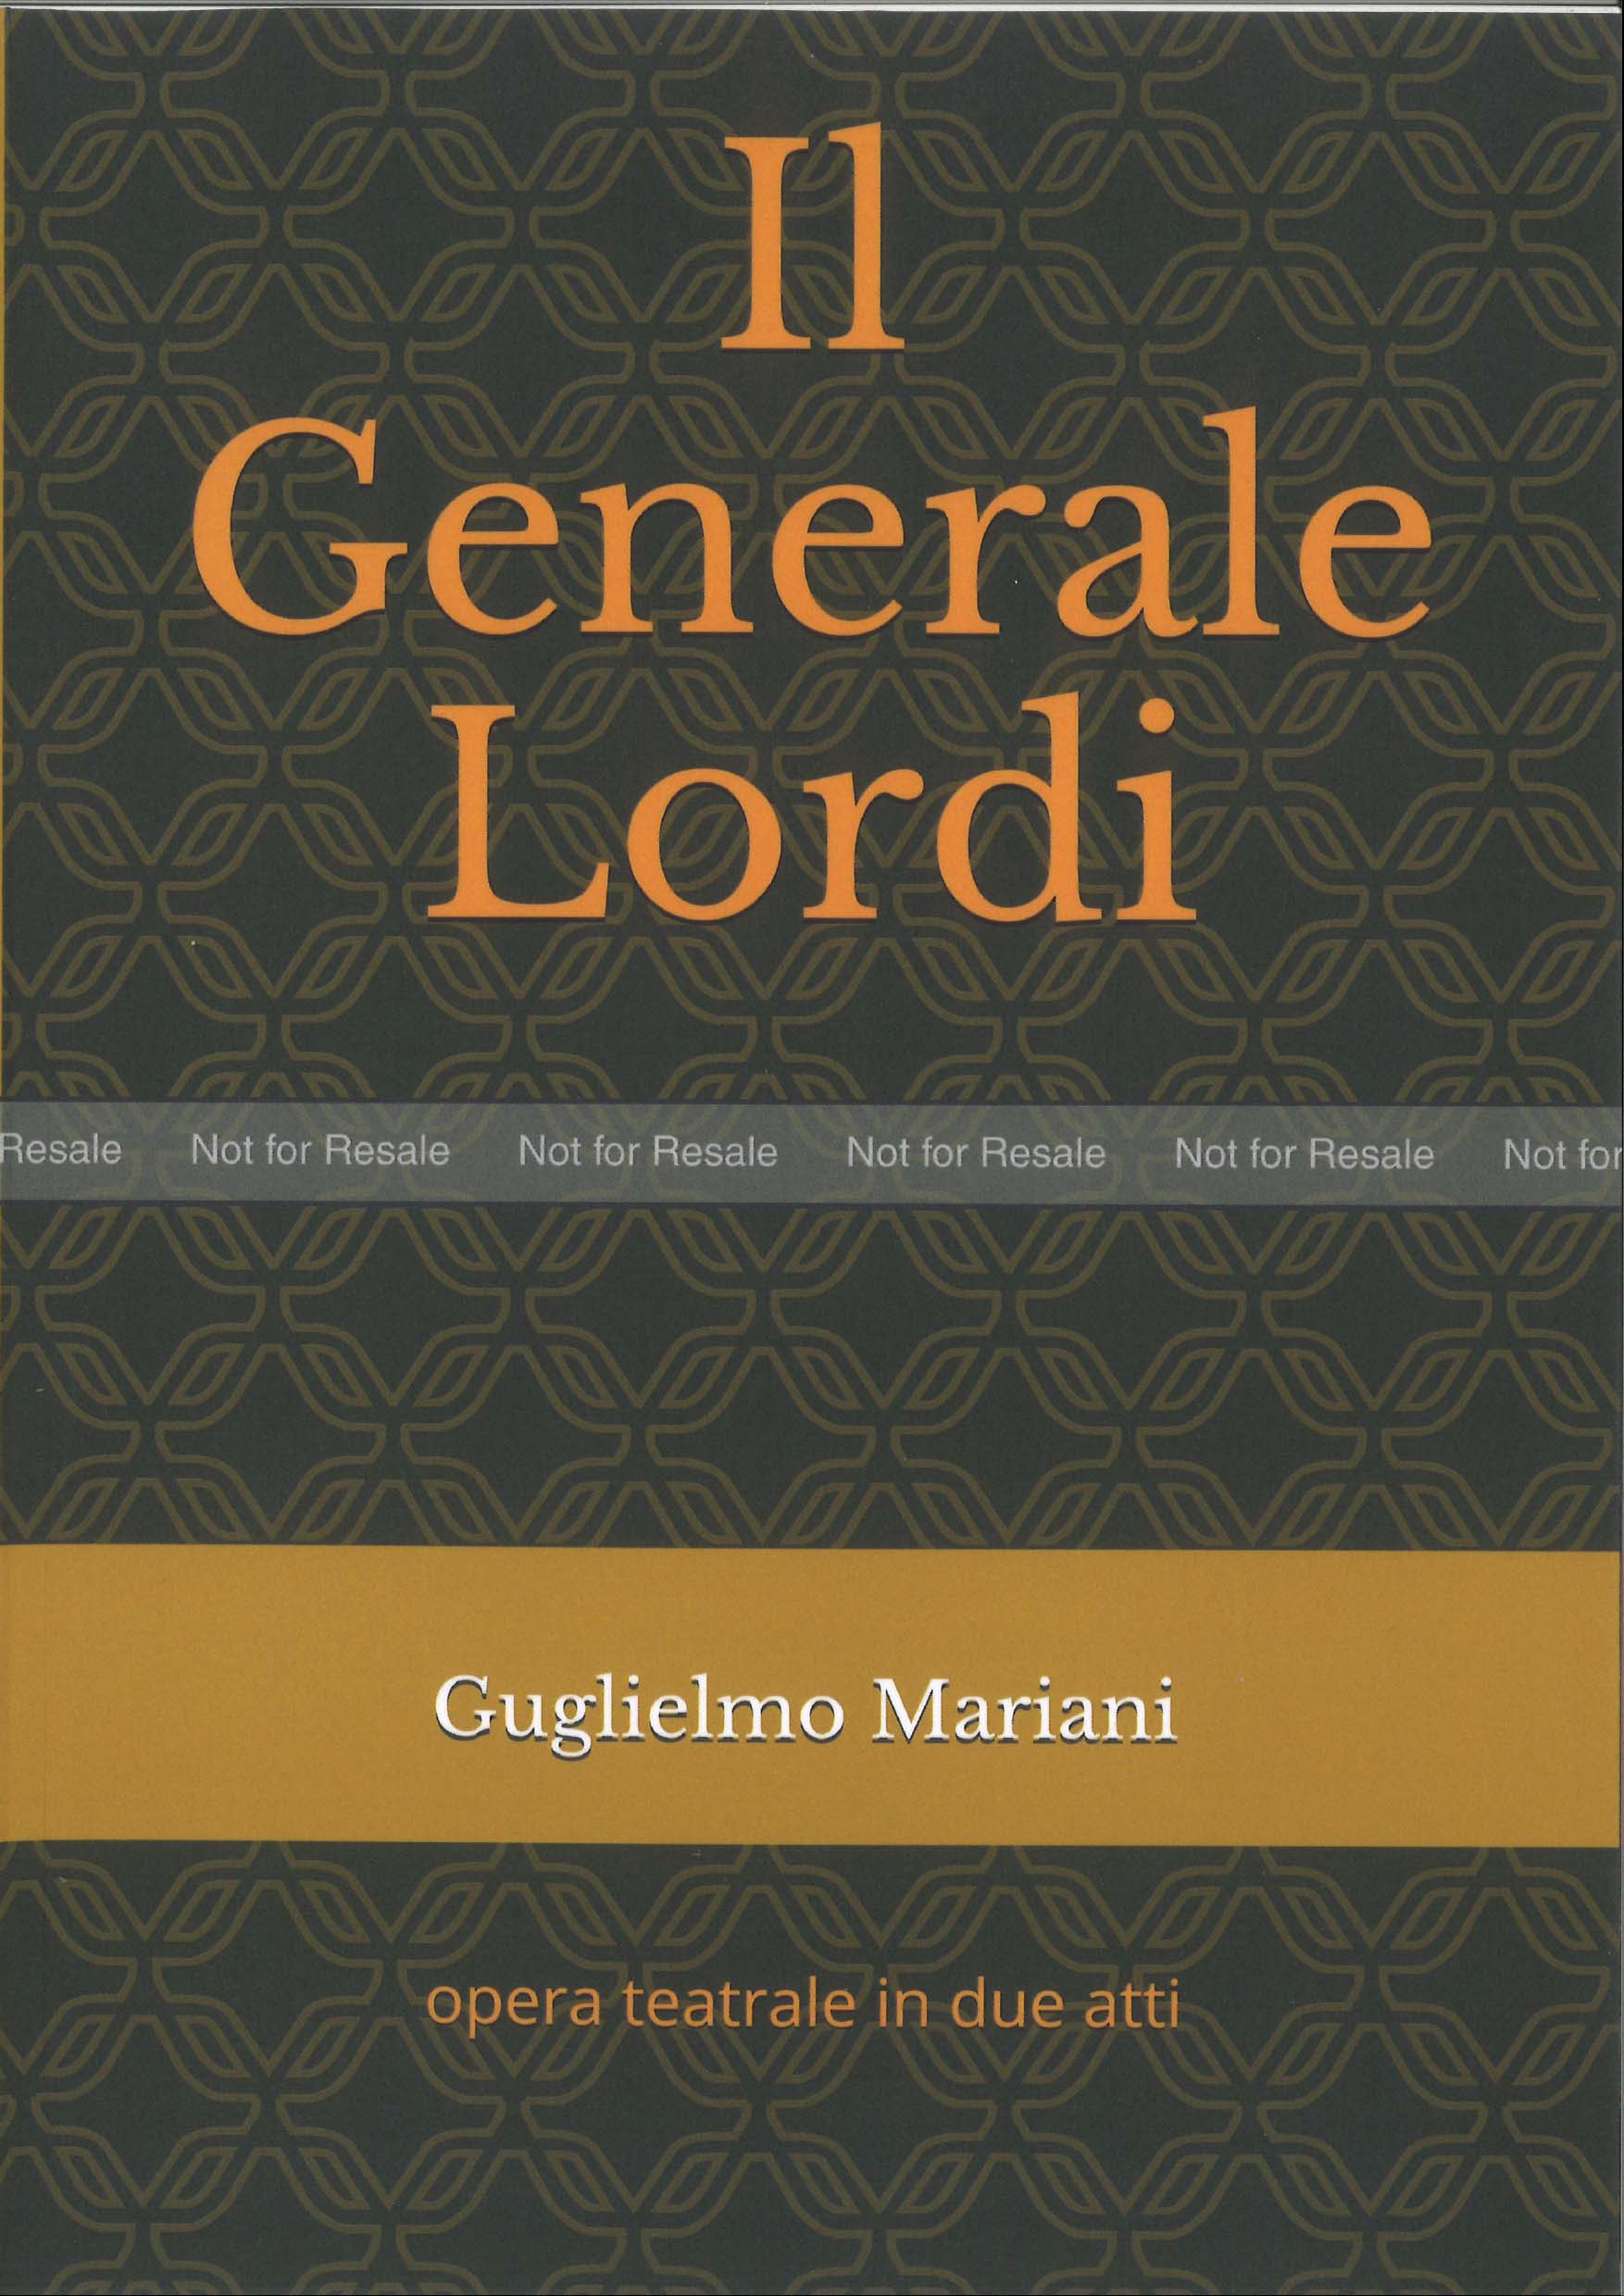 IIl Generale Lordi opera teatrale di Guglielmo Mariani Opere letterarie